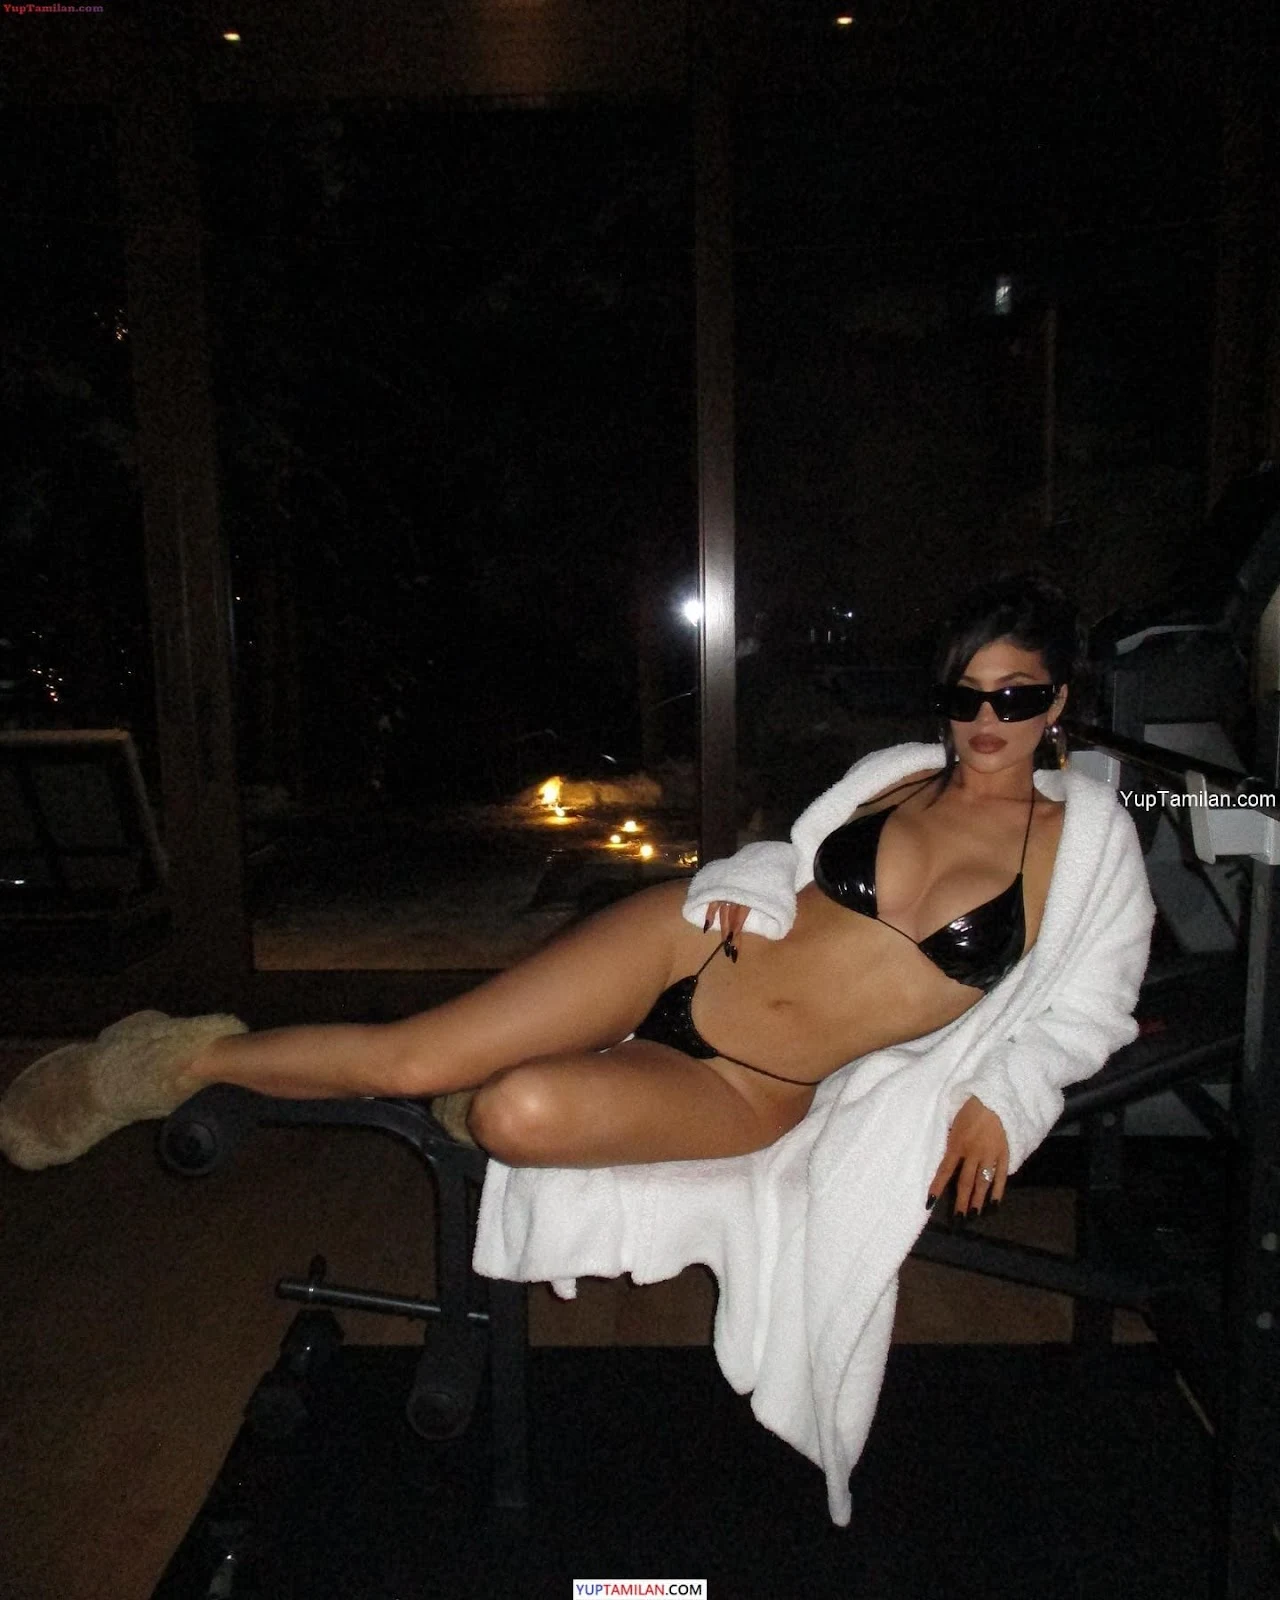 Kylie Jenner Sexy Bikini Photos - Hot Assets Show